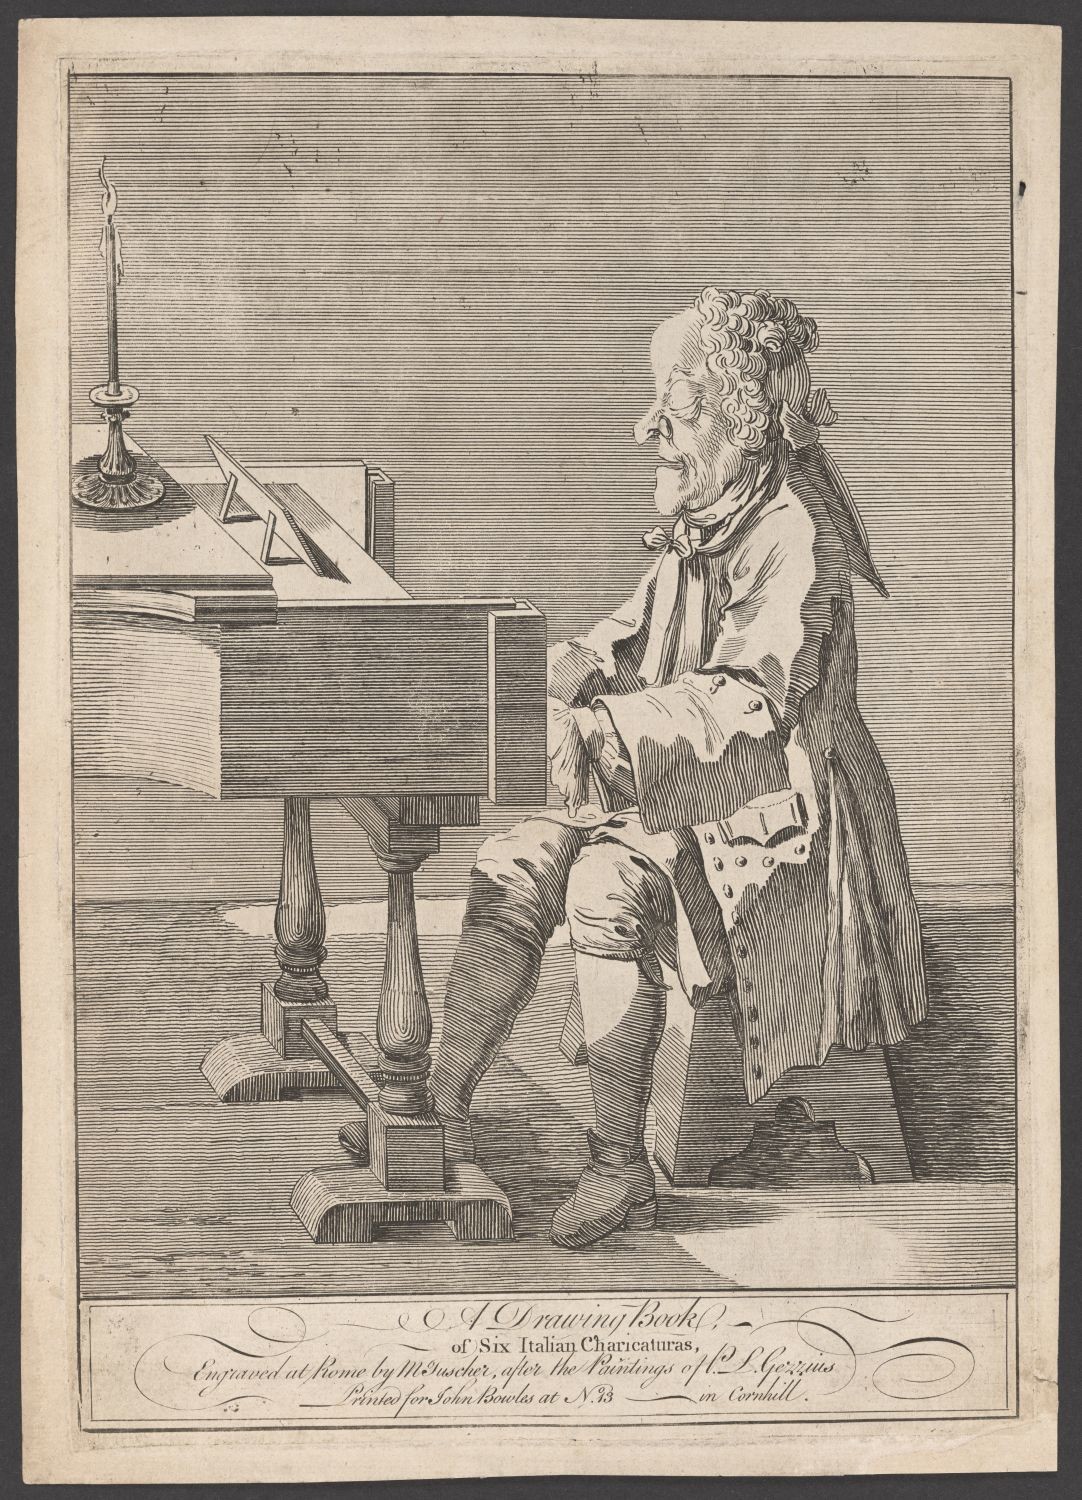 Porträt Thomas Augustine Arne (1710-1778) (Stiftung Händelhaus, Halle CC BY-NC-SA)